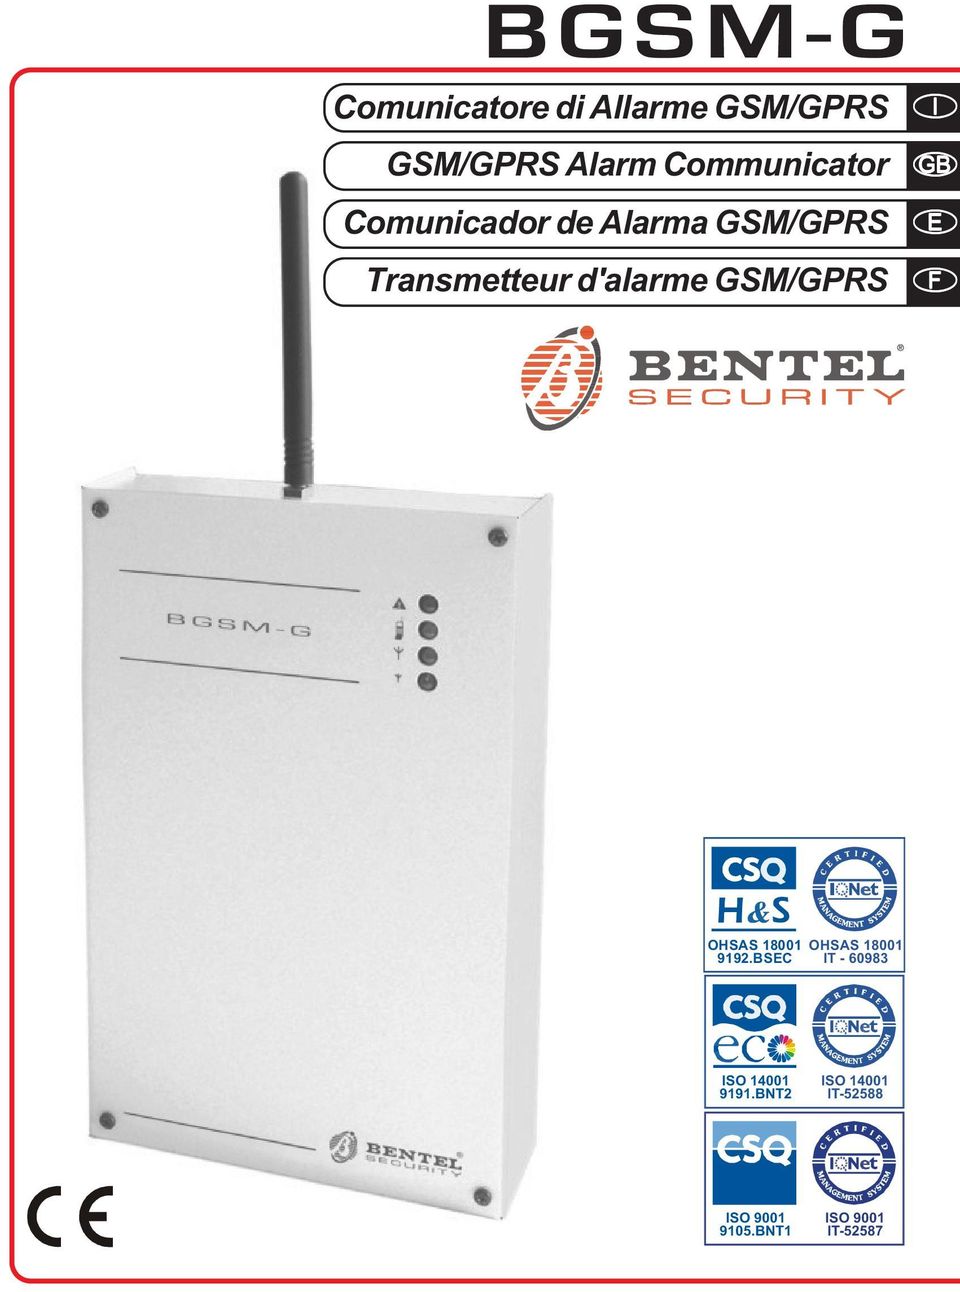 Alarma GSM/GPRS E Transmetteur d'alarme